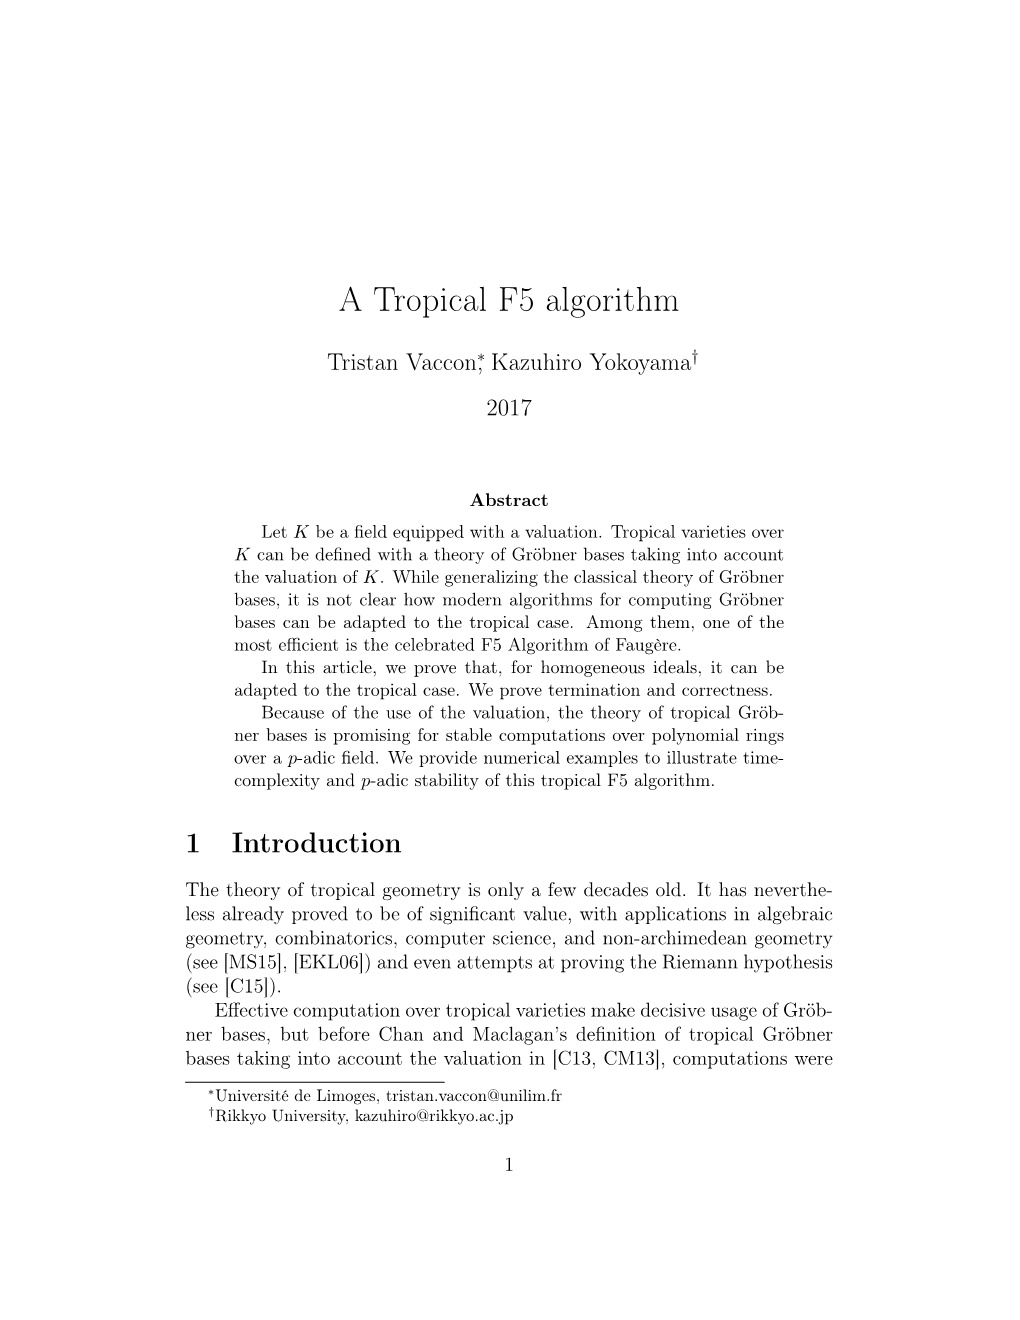 A Tropical F5 Algorithm